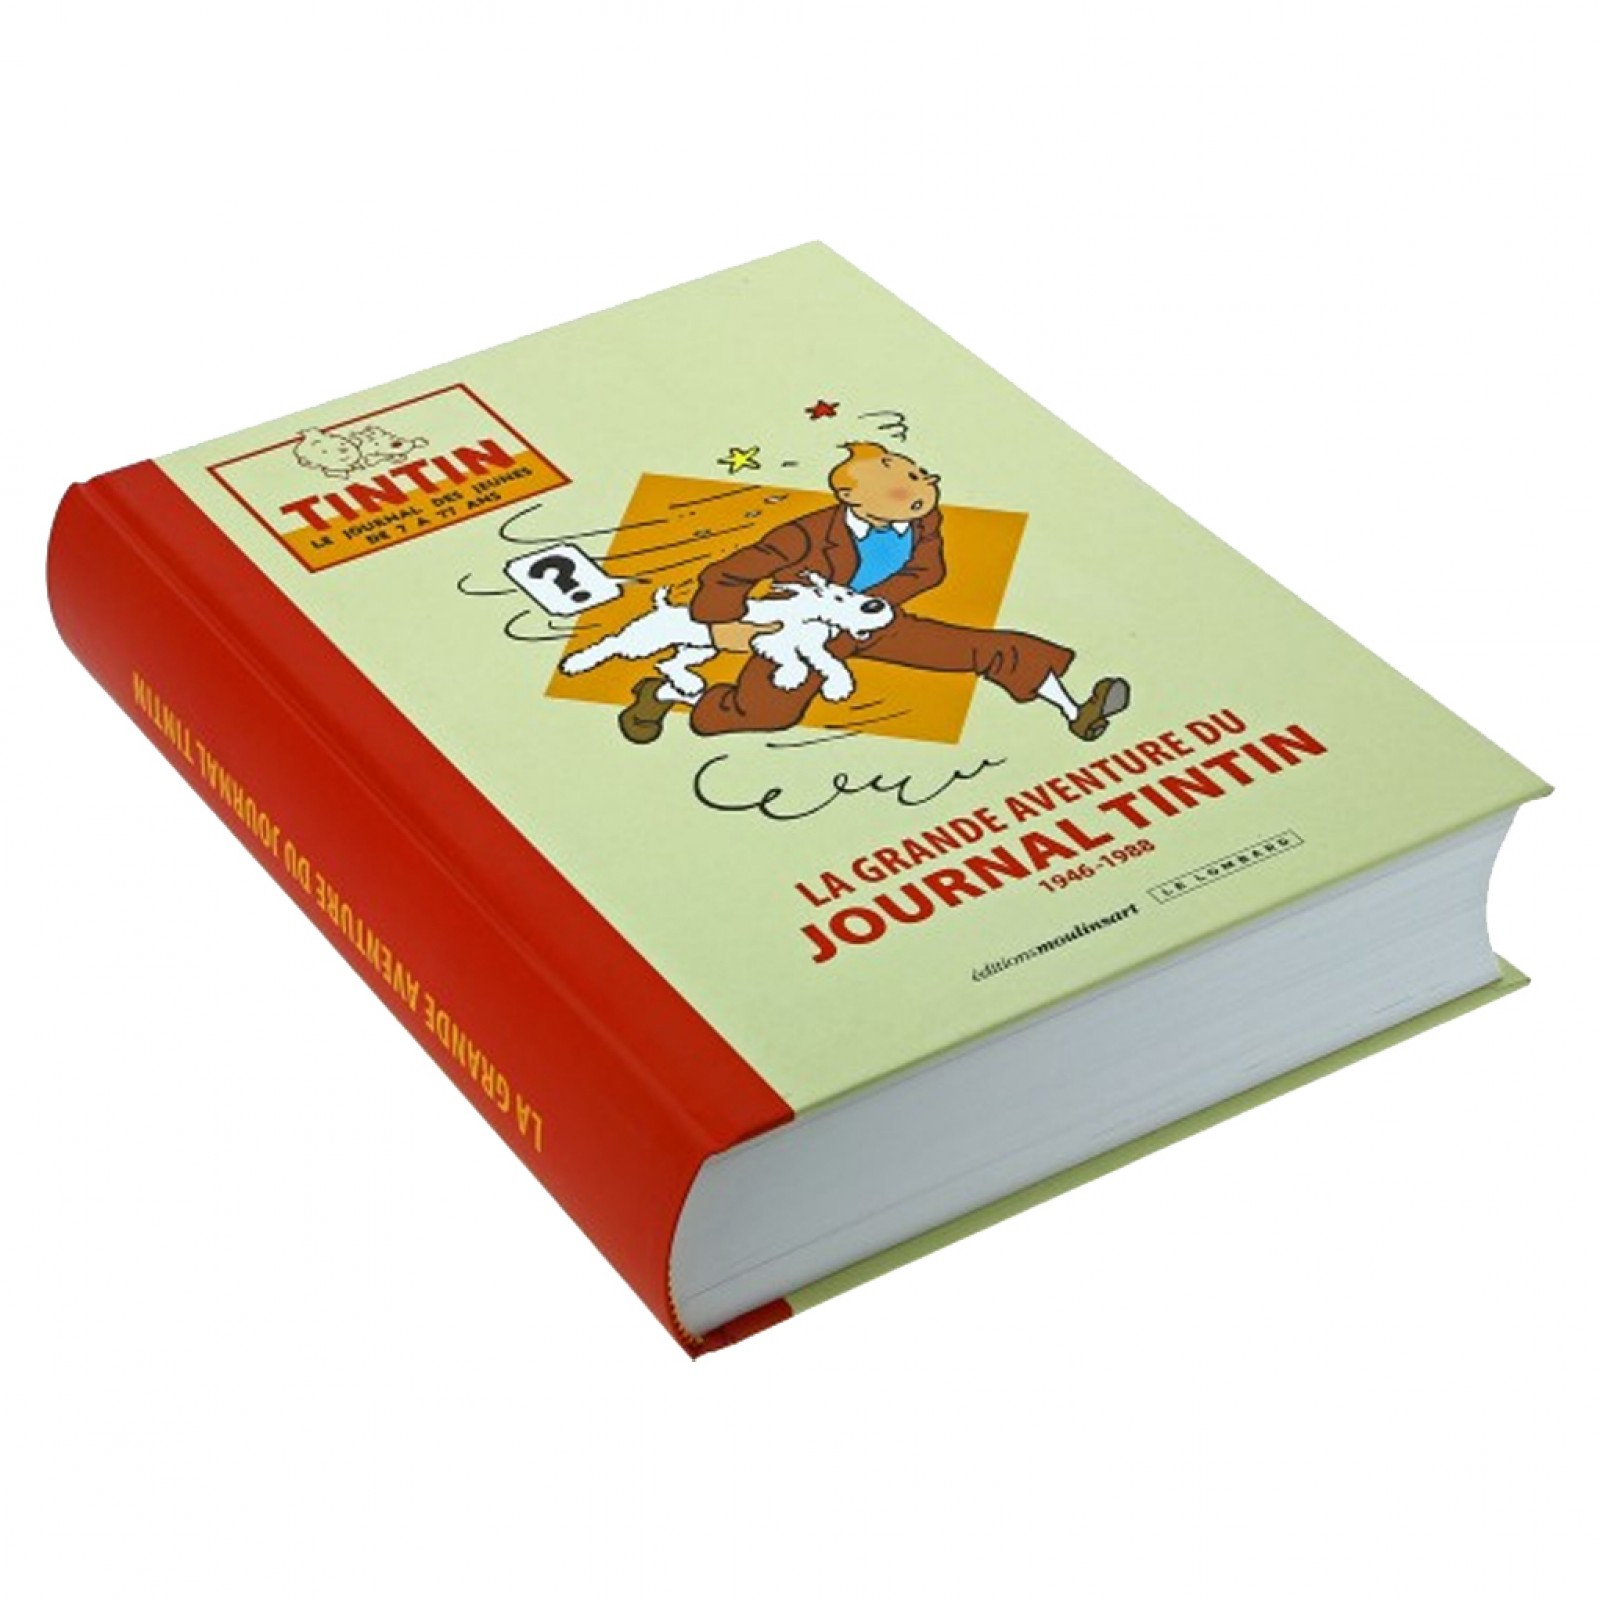 Tintin - Journal Tintin - spécial 77 ans - Collectif, Collectif - broché -  Achat Livre ou ebook